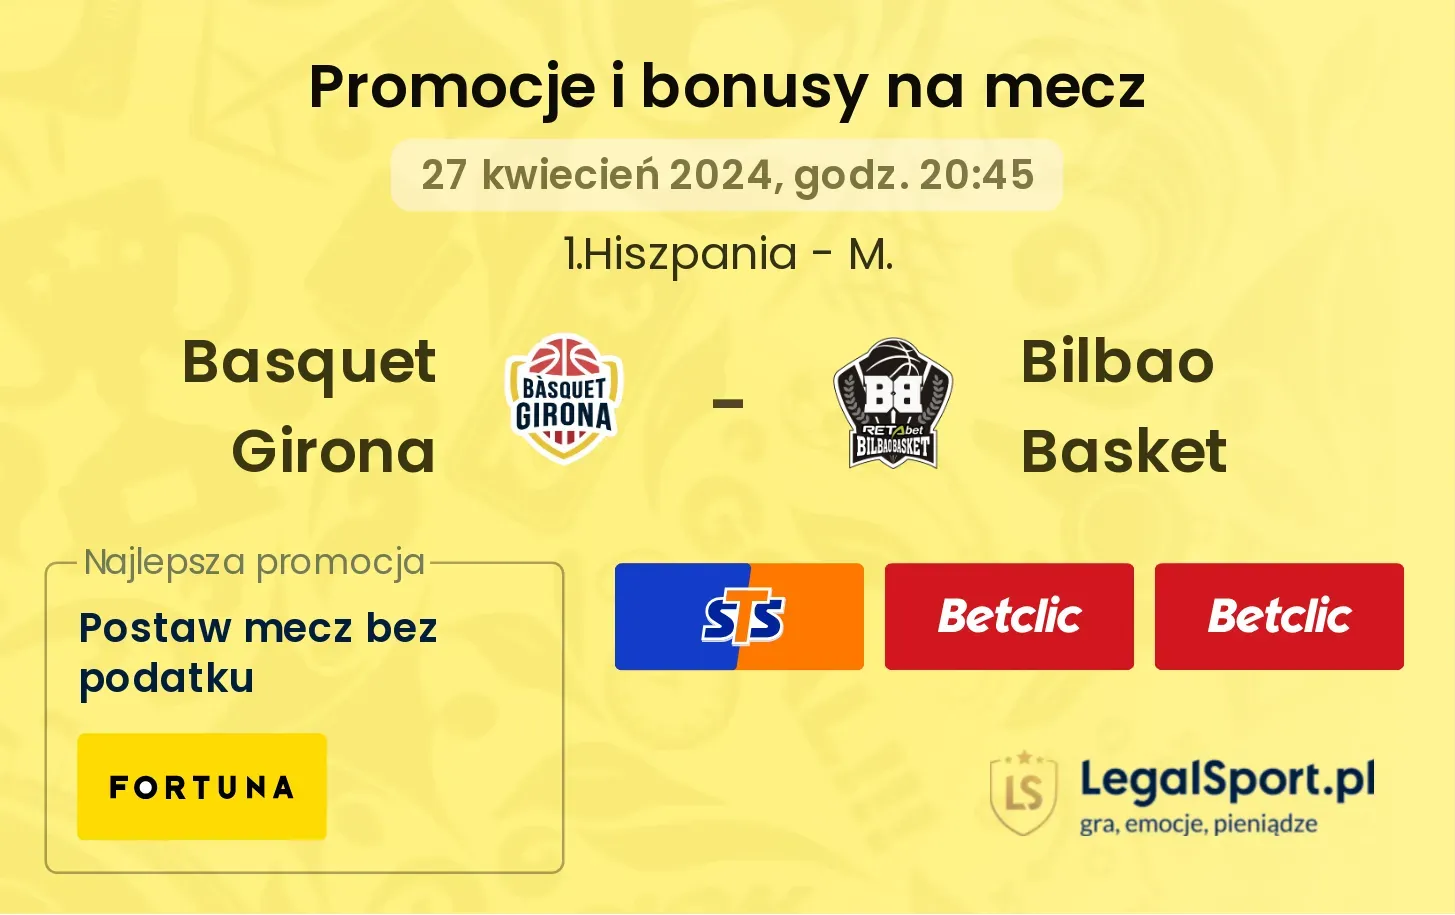 Basquet Girona - Bilbao Basket promocje bonusy na mecz